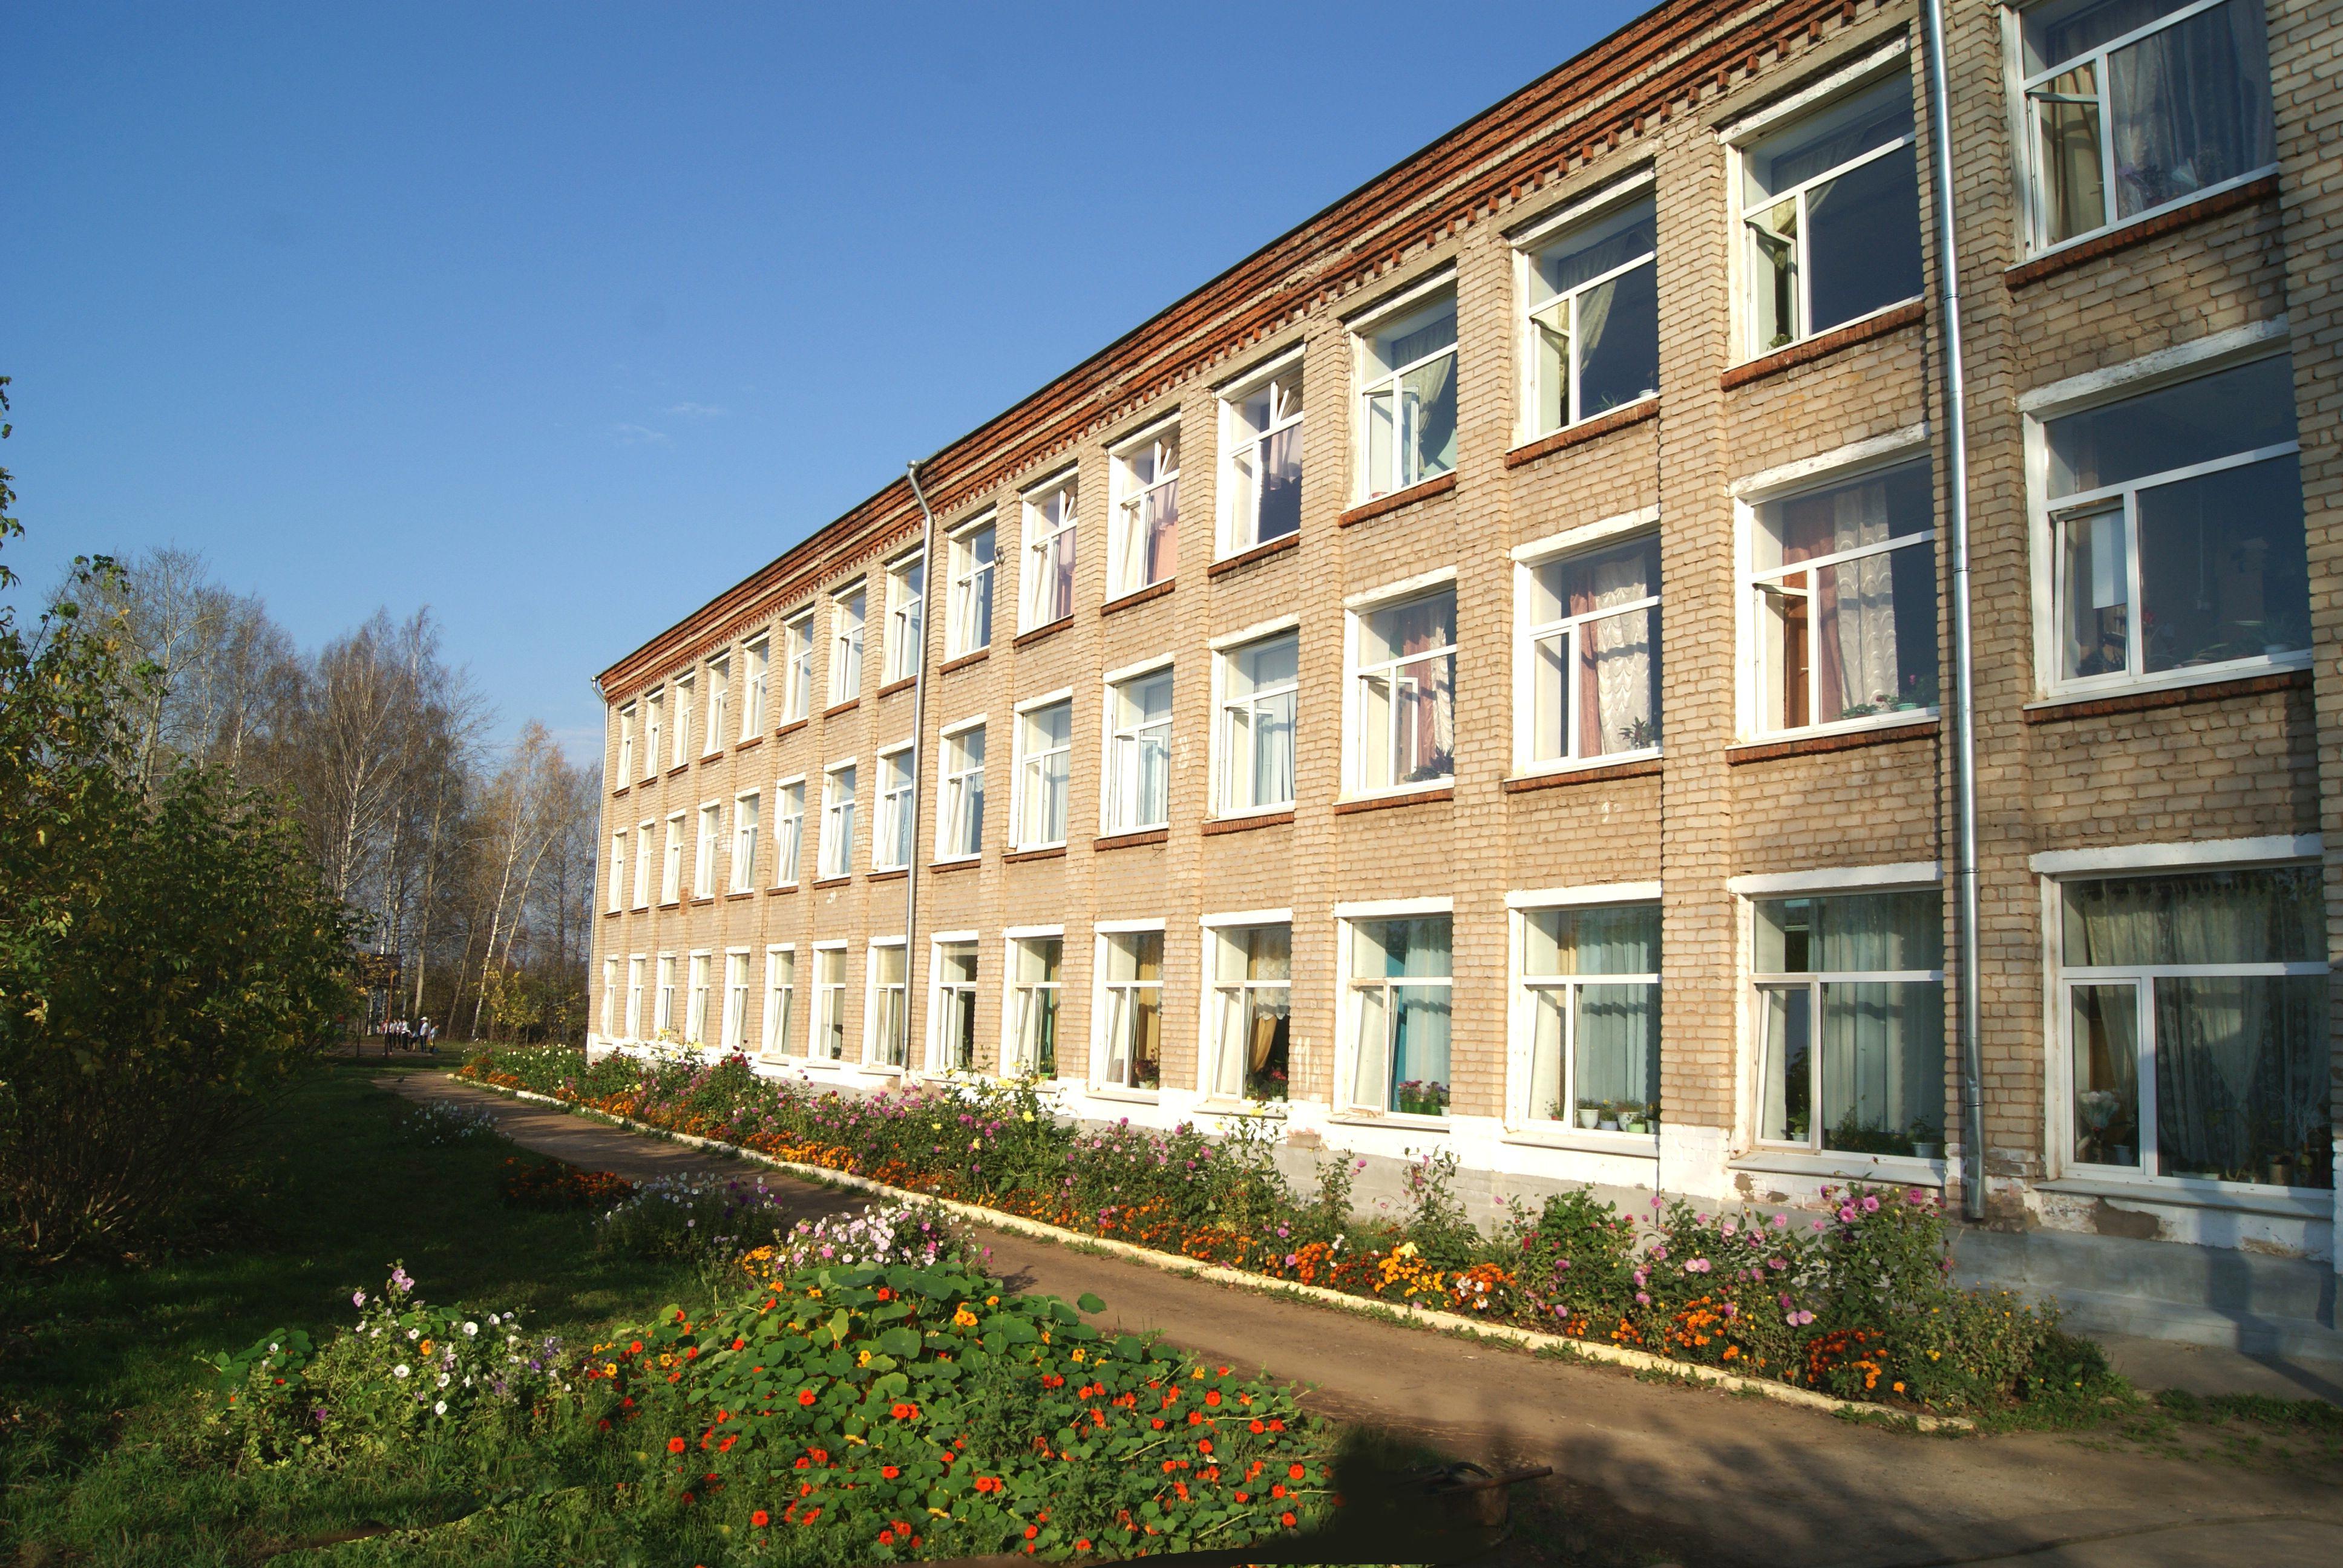 Сайт школ пермского района